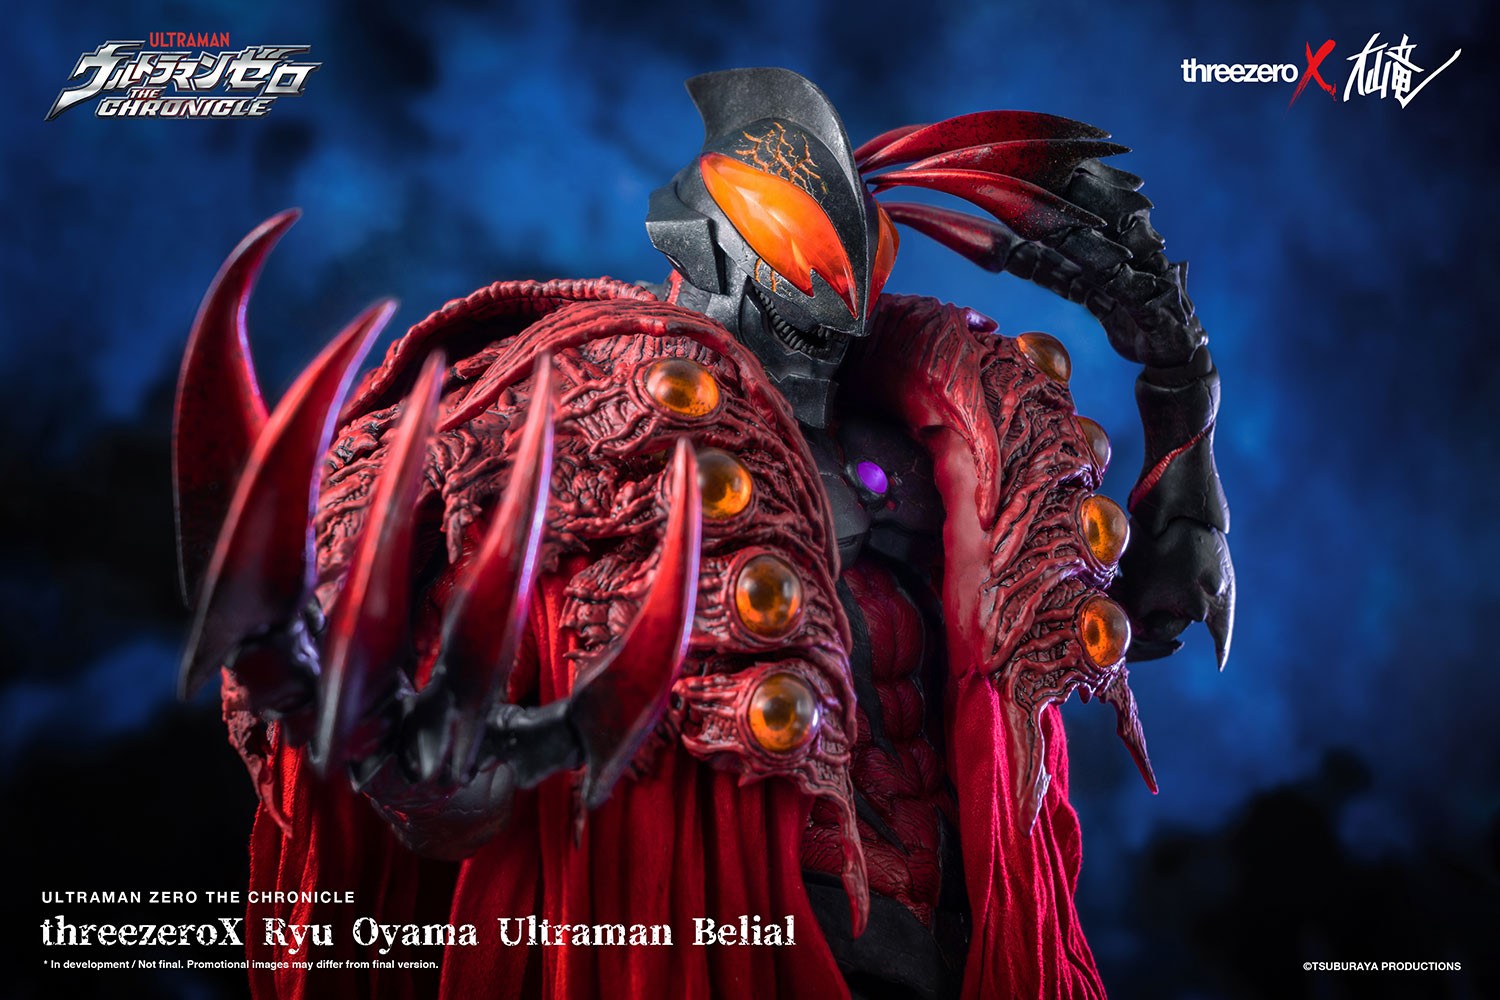 Ryu Oyama Ultraman Belial- Prototype Shown